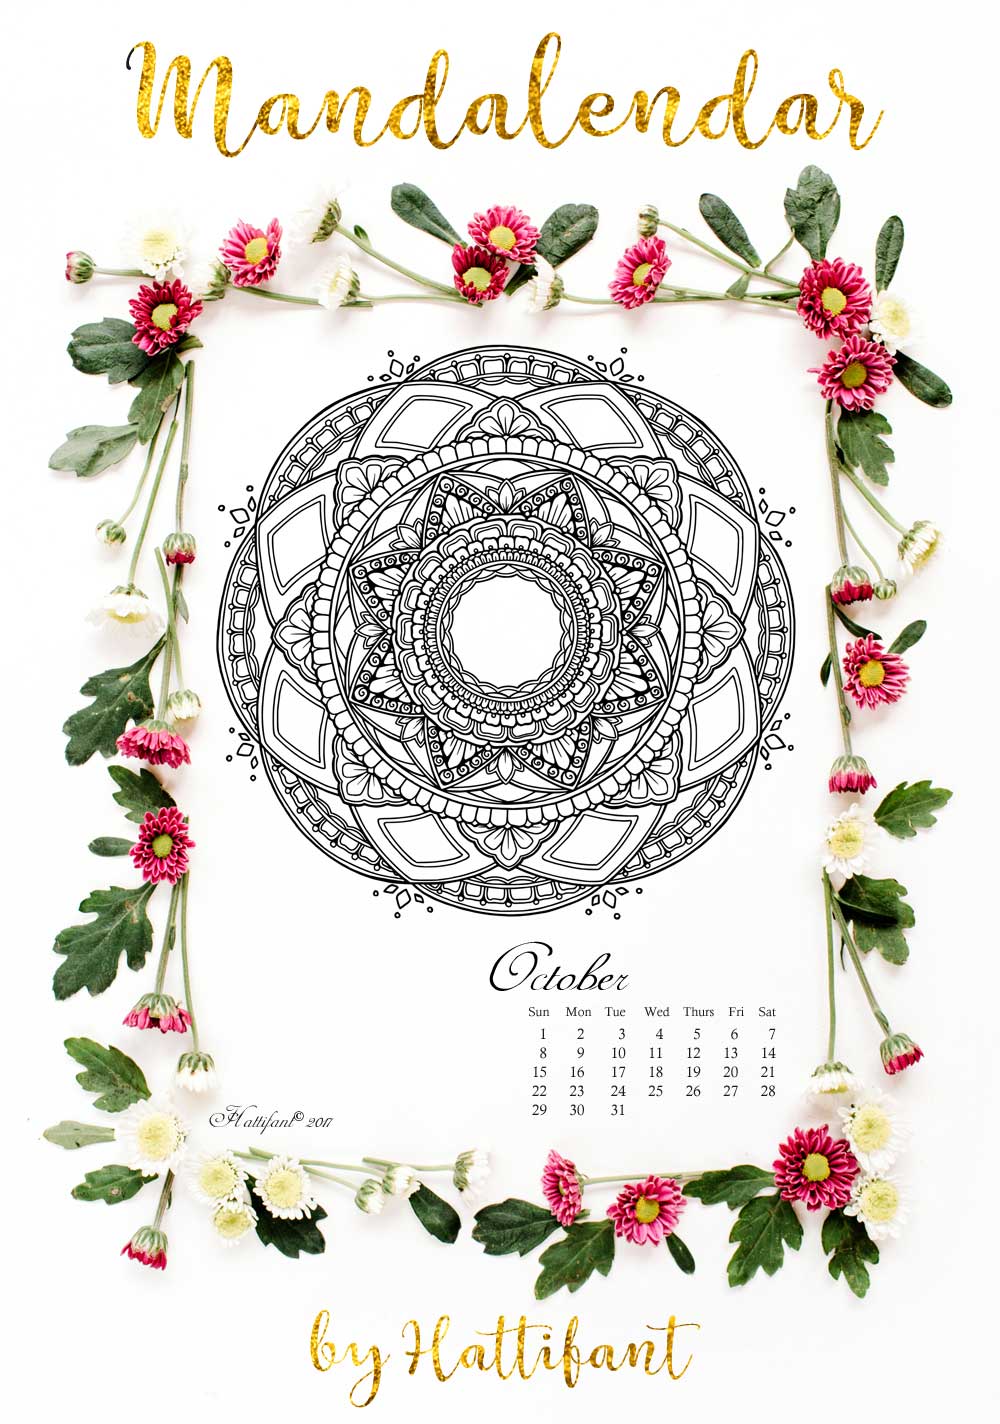 Hattifant's Mandalandar 2017 a Mandala Calendar Coloring Page to download for free during October